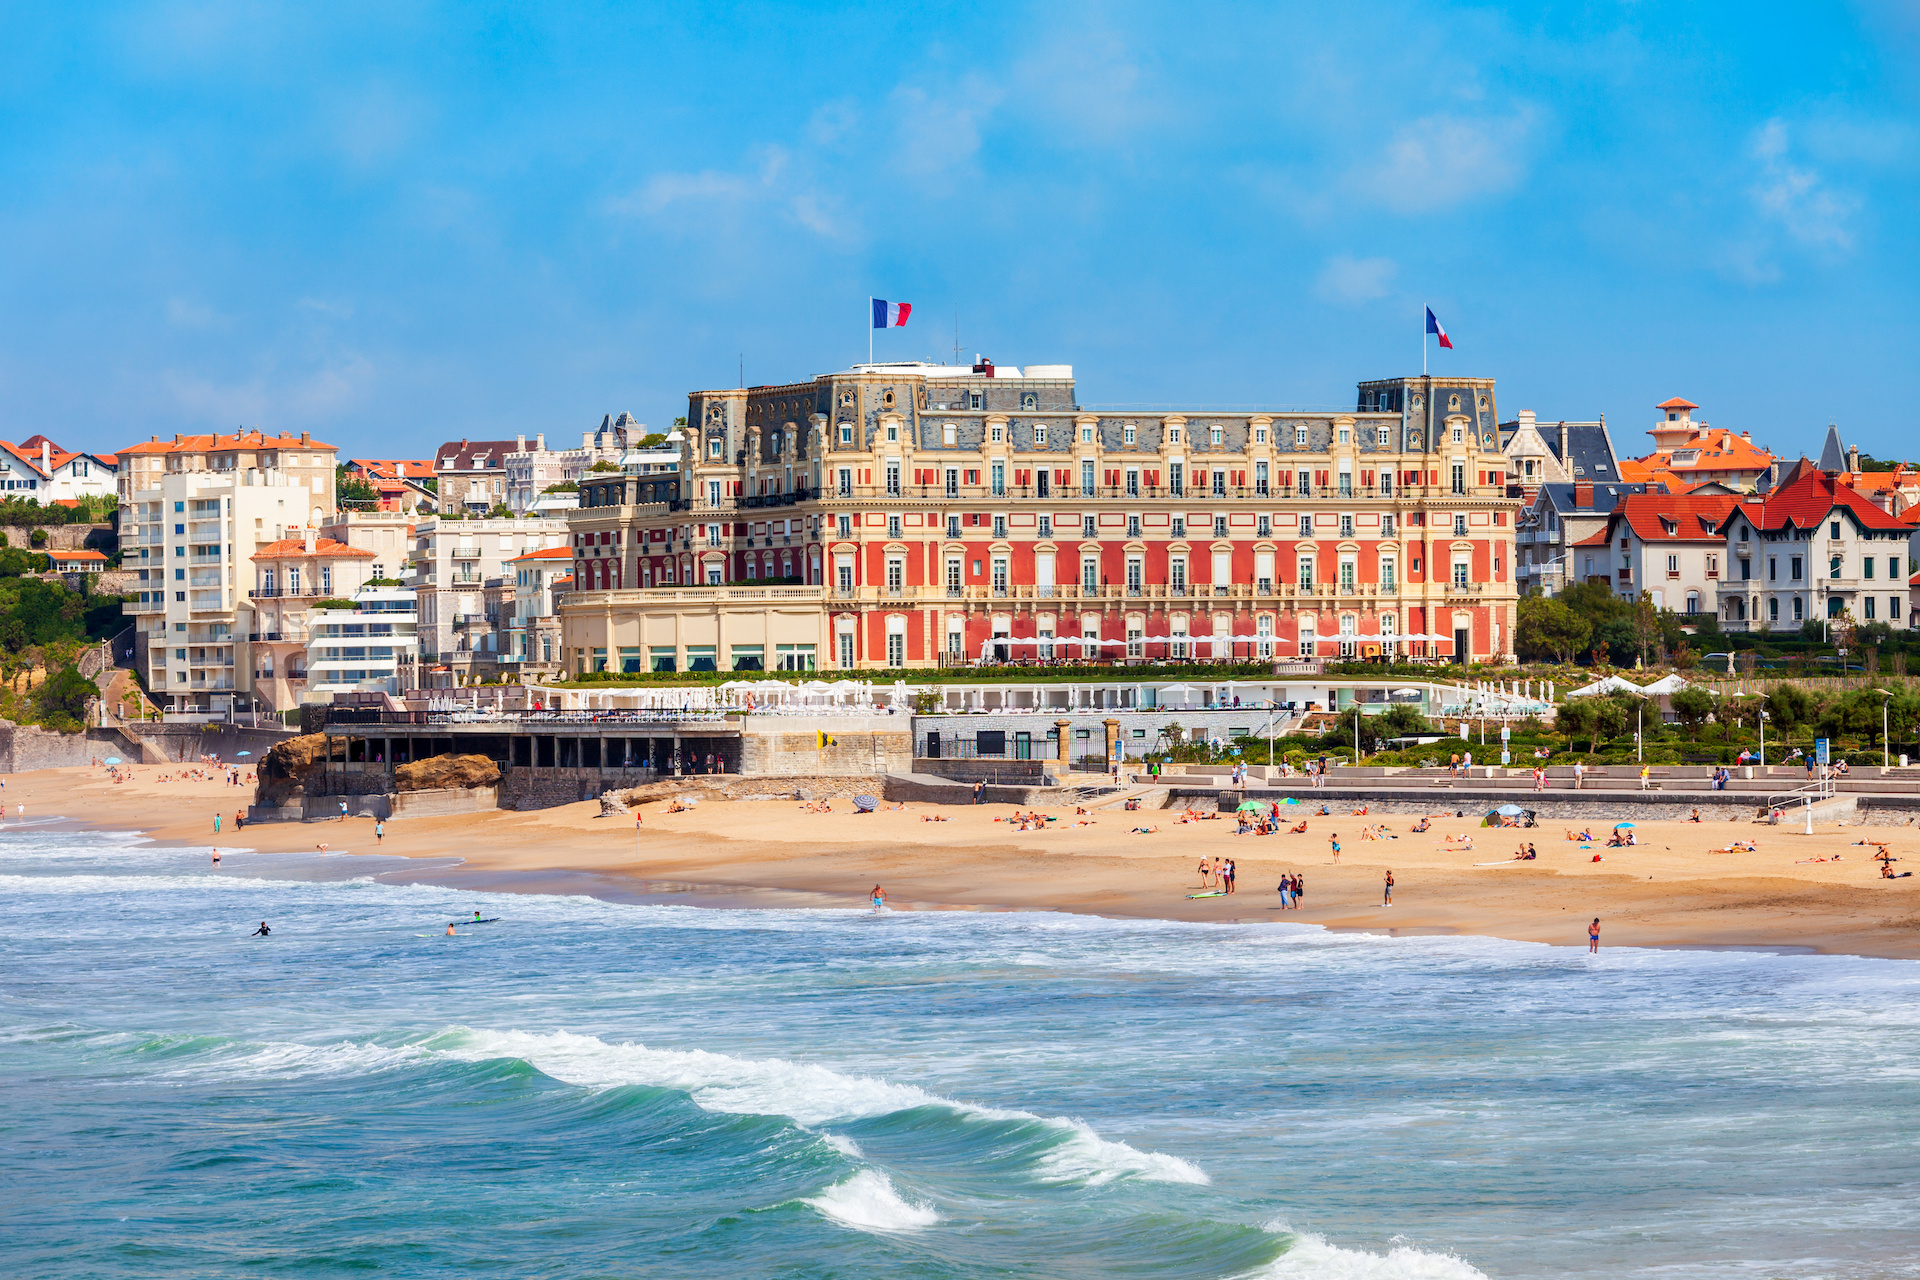 Hôtel du Palais, the symbolic jewel of Biarritz